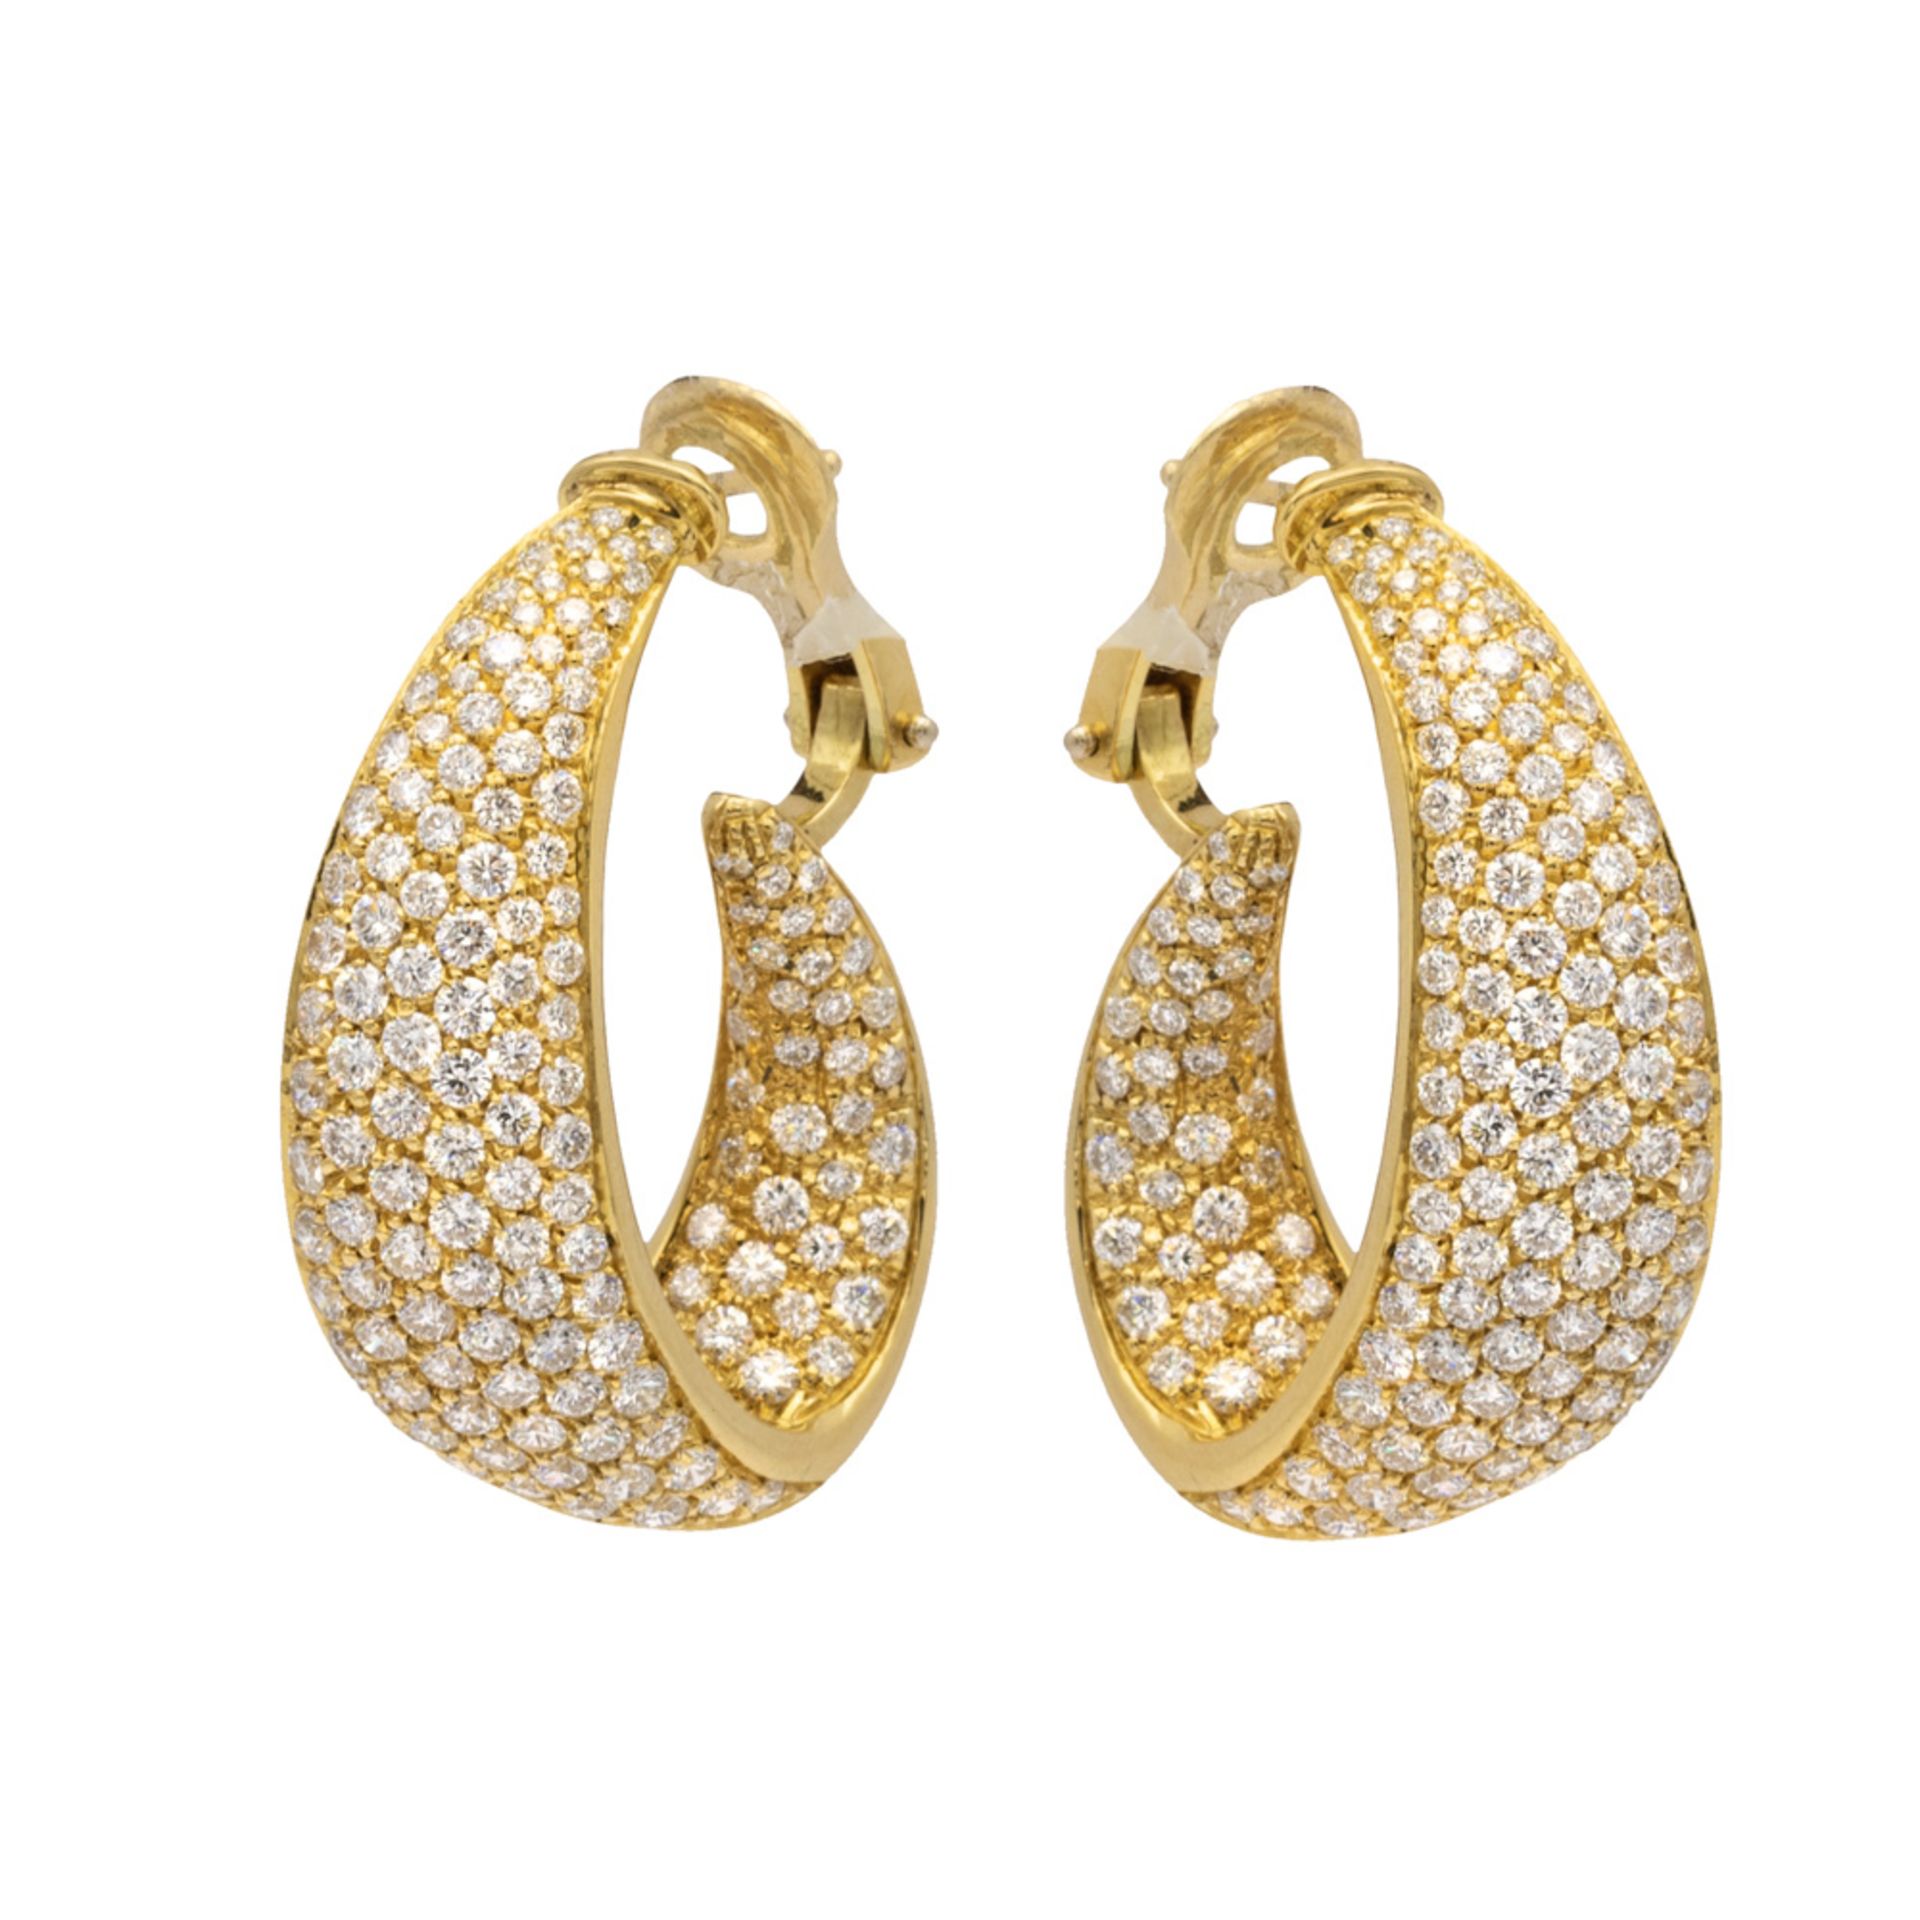 18kt yellow gold and diamonds Creole earrings